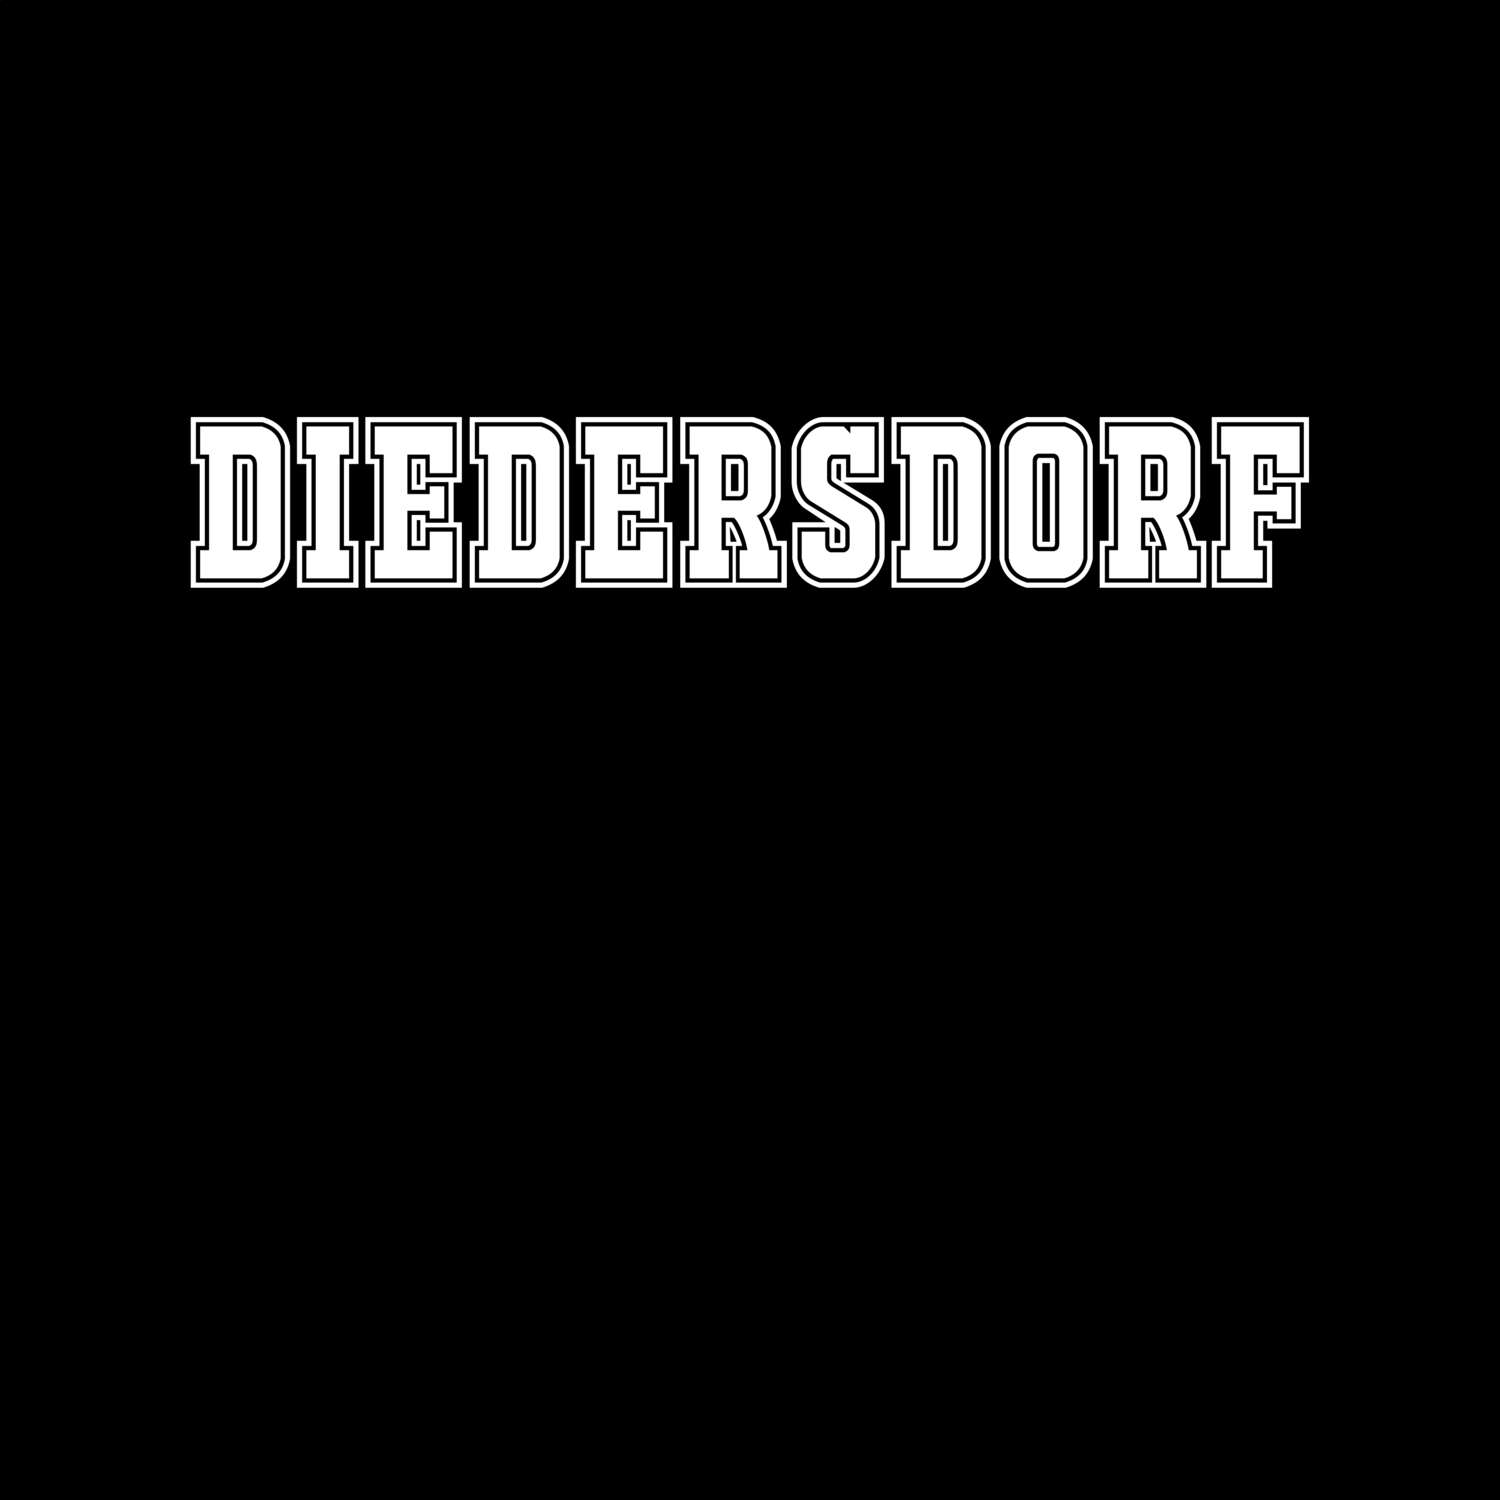 Diedersdorf T-Shirt »Classic«